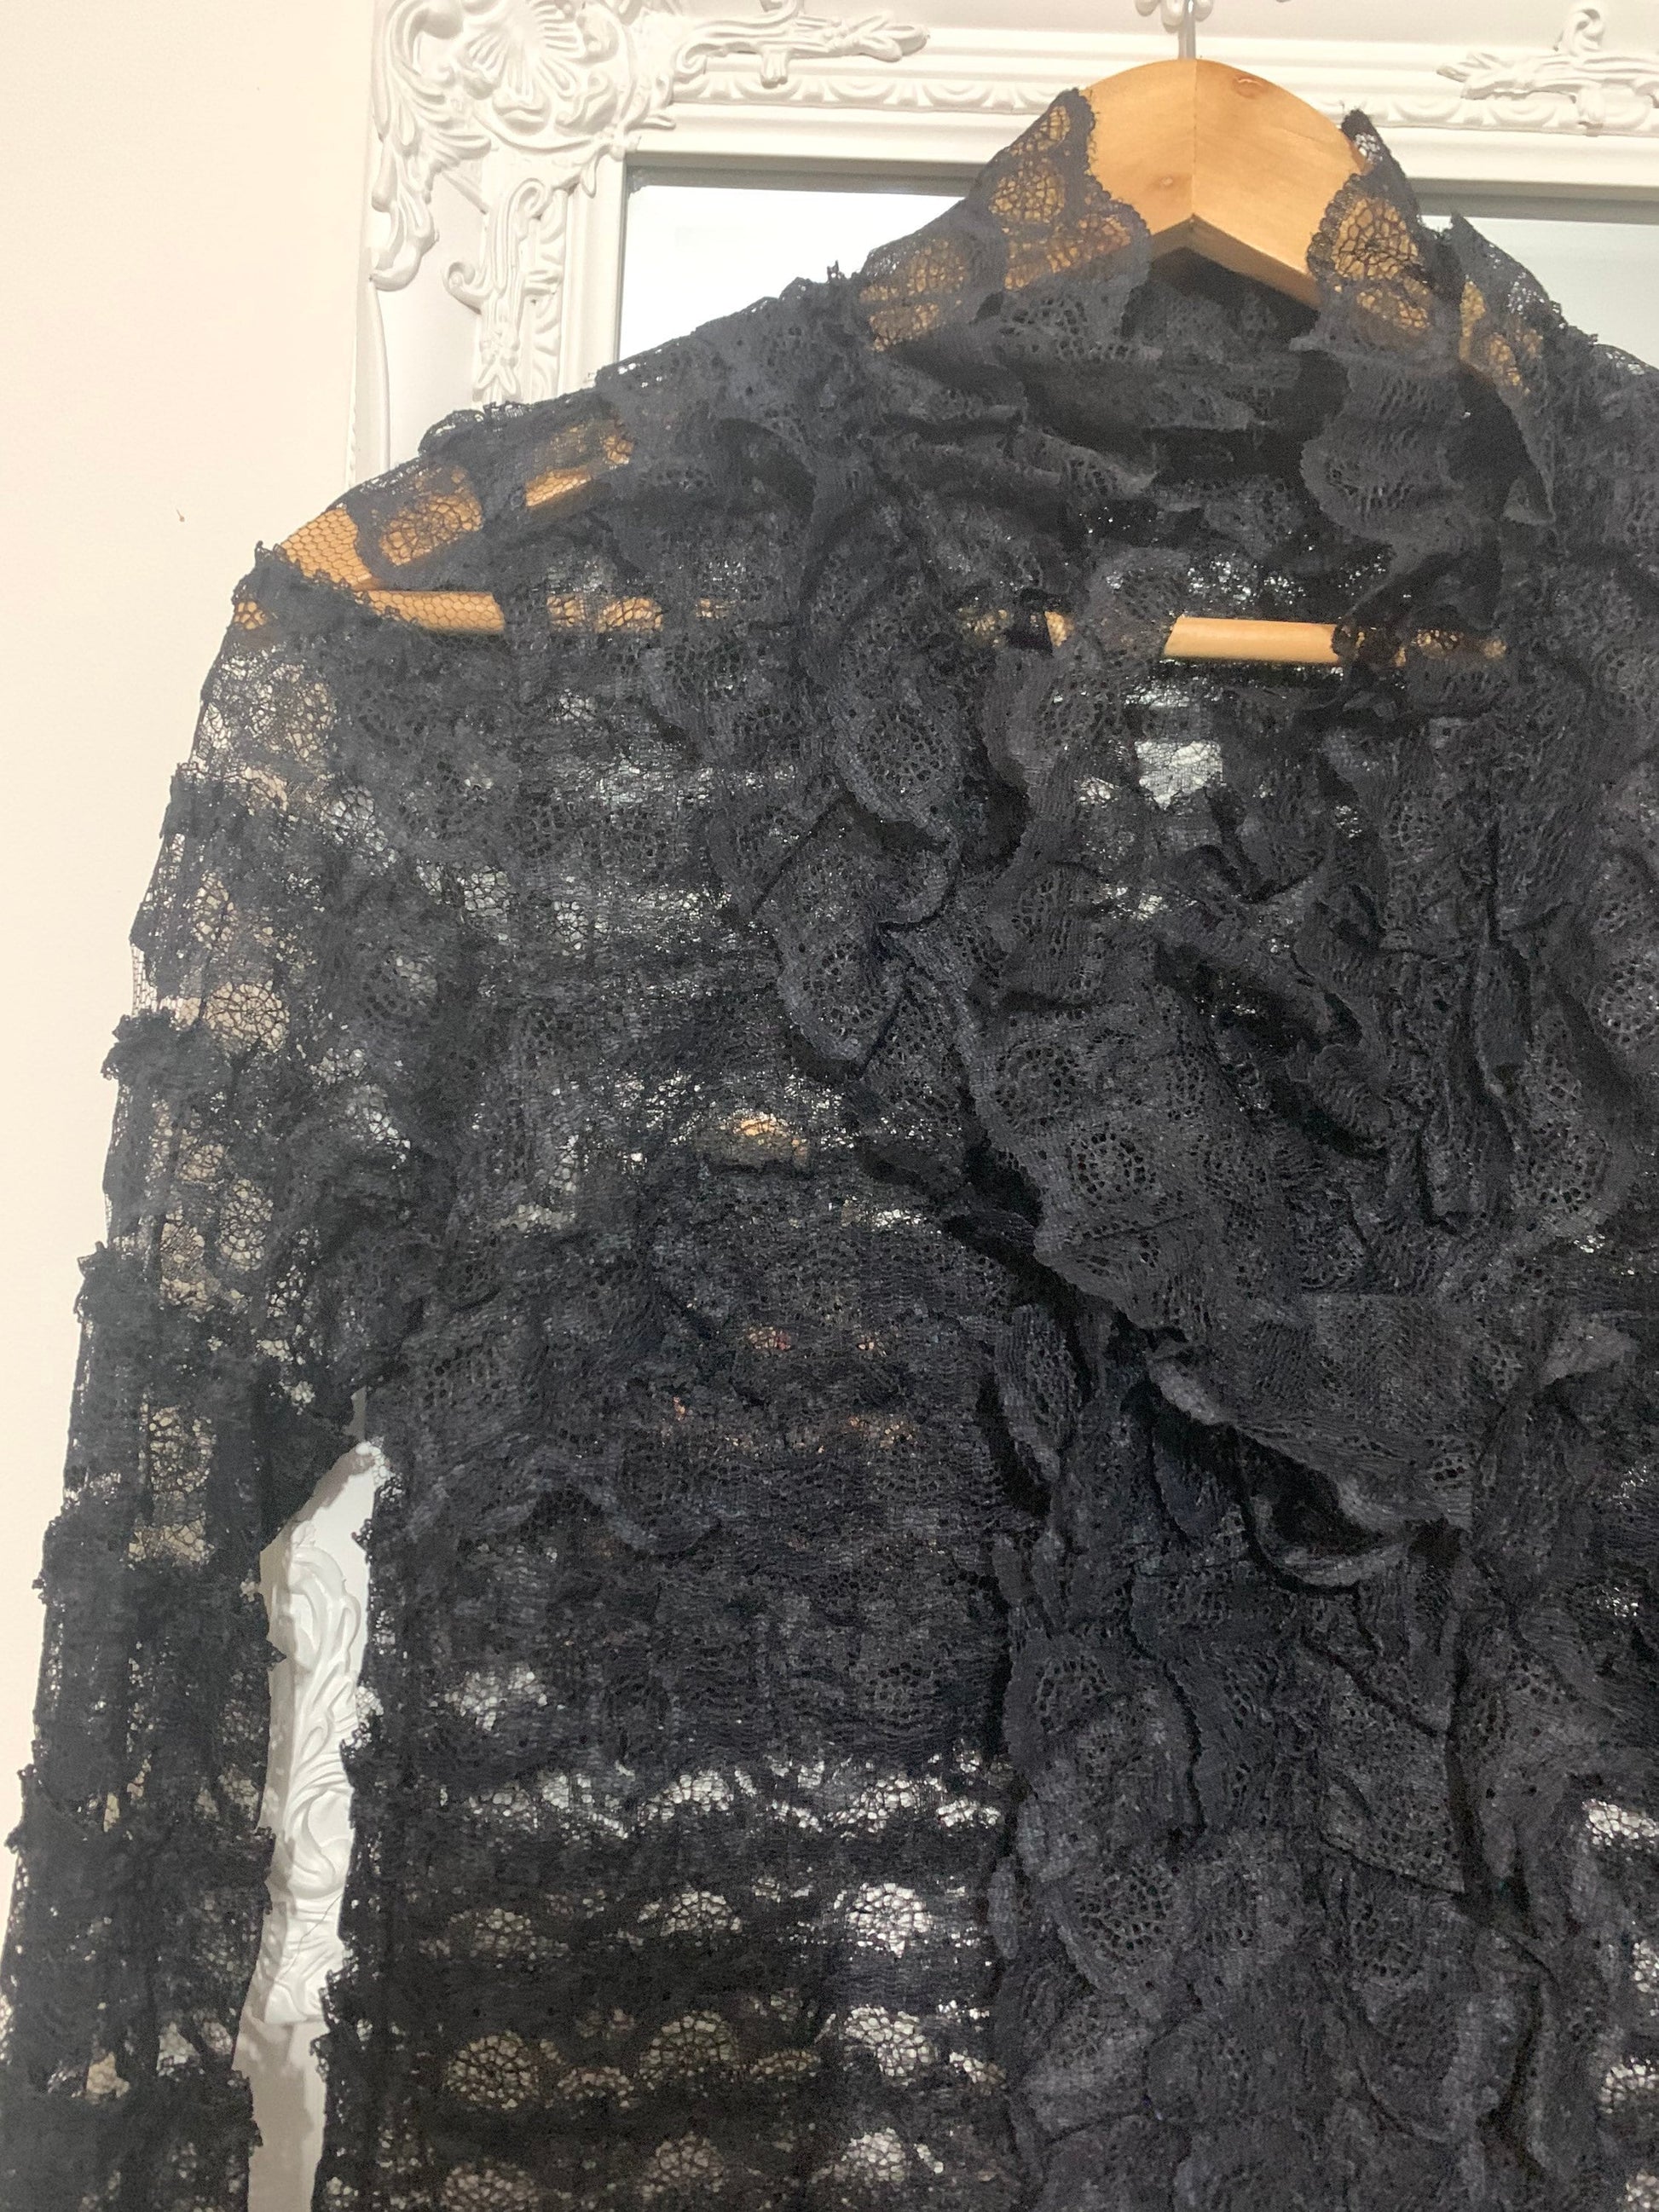 Vintage black 70s lace ruffle front blouse - Black Sheer Lace Blouse